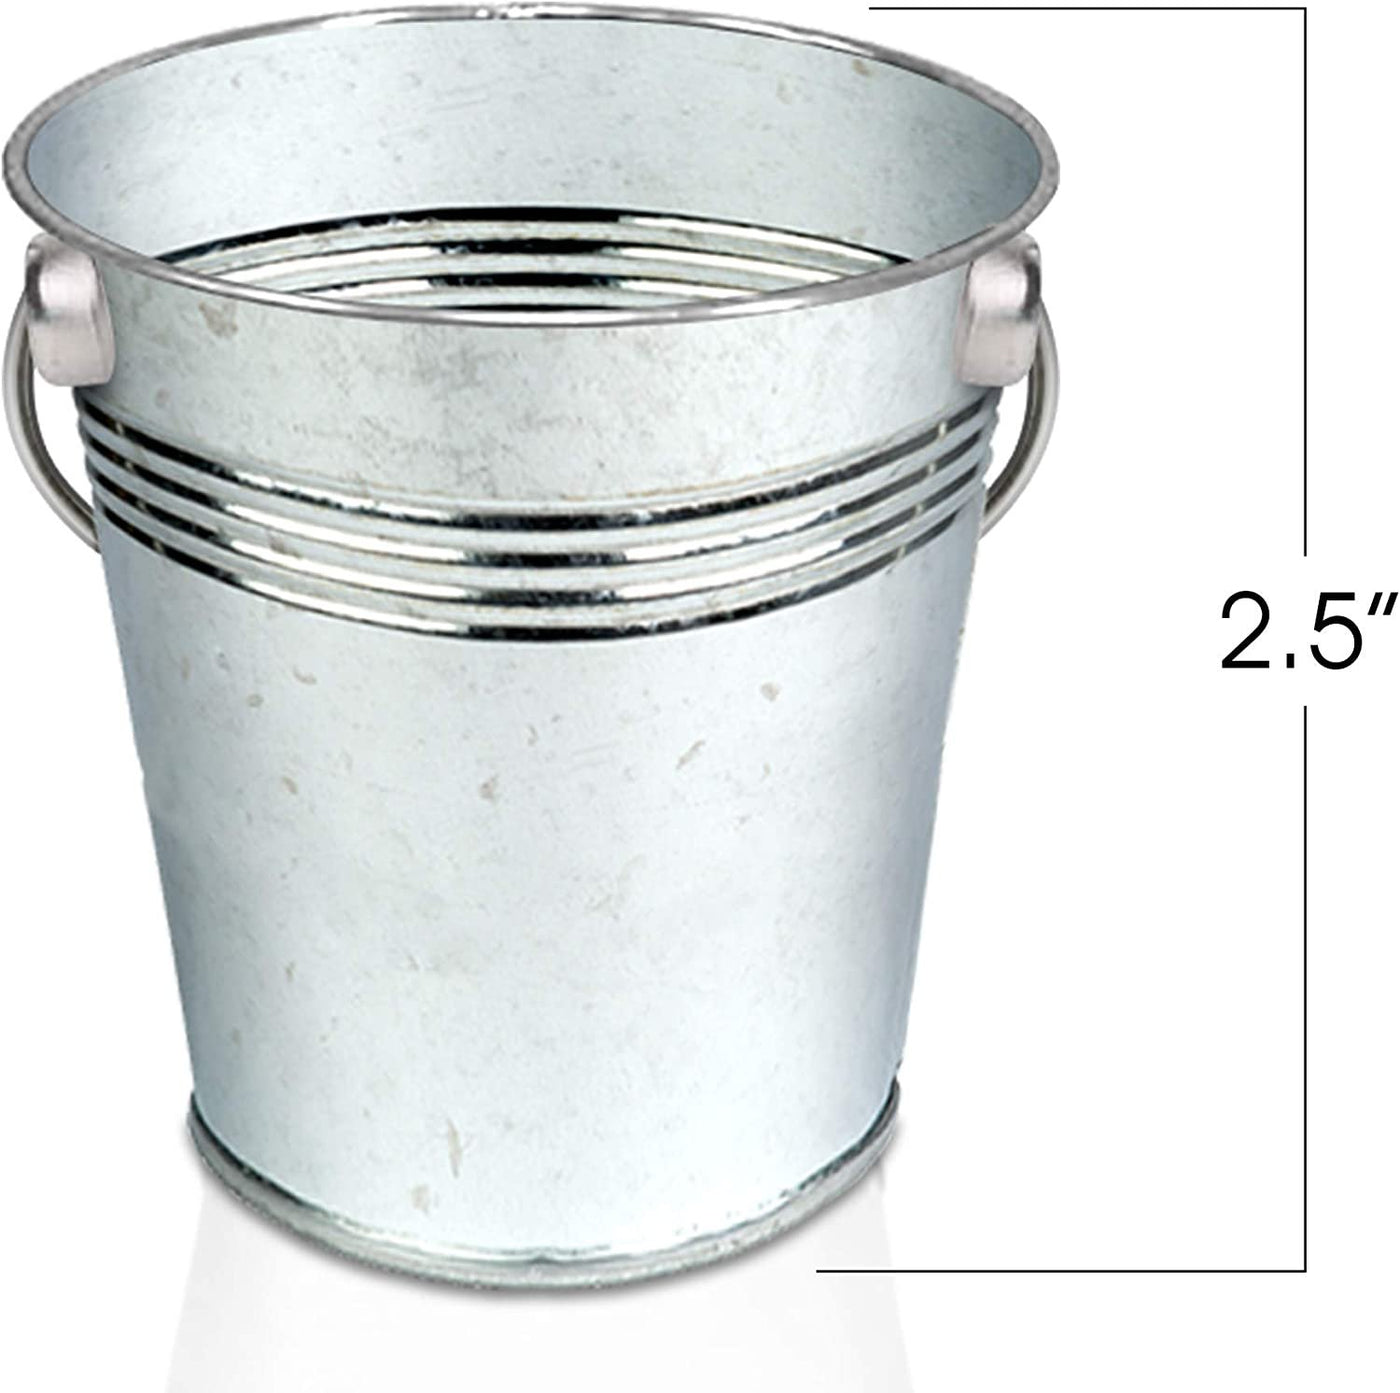 ArtCreativity Mini Galvanized Metal Buckets with Handles - Set of